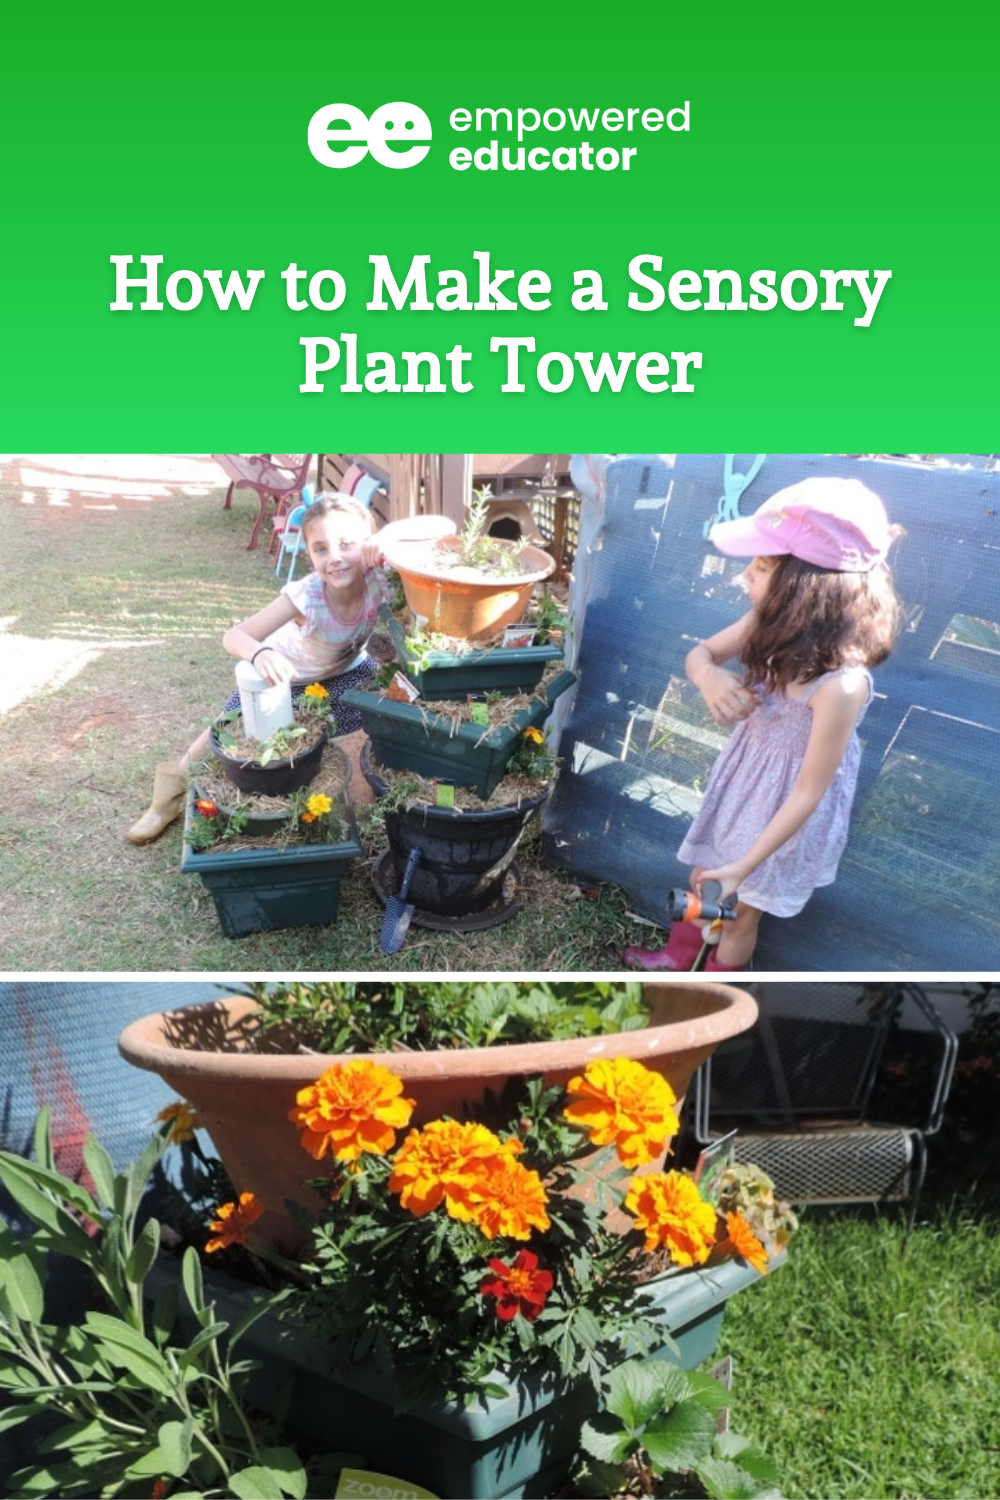 How to Make a Sensory Plant Tower